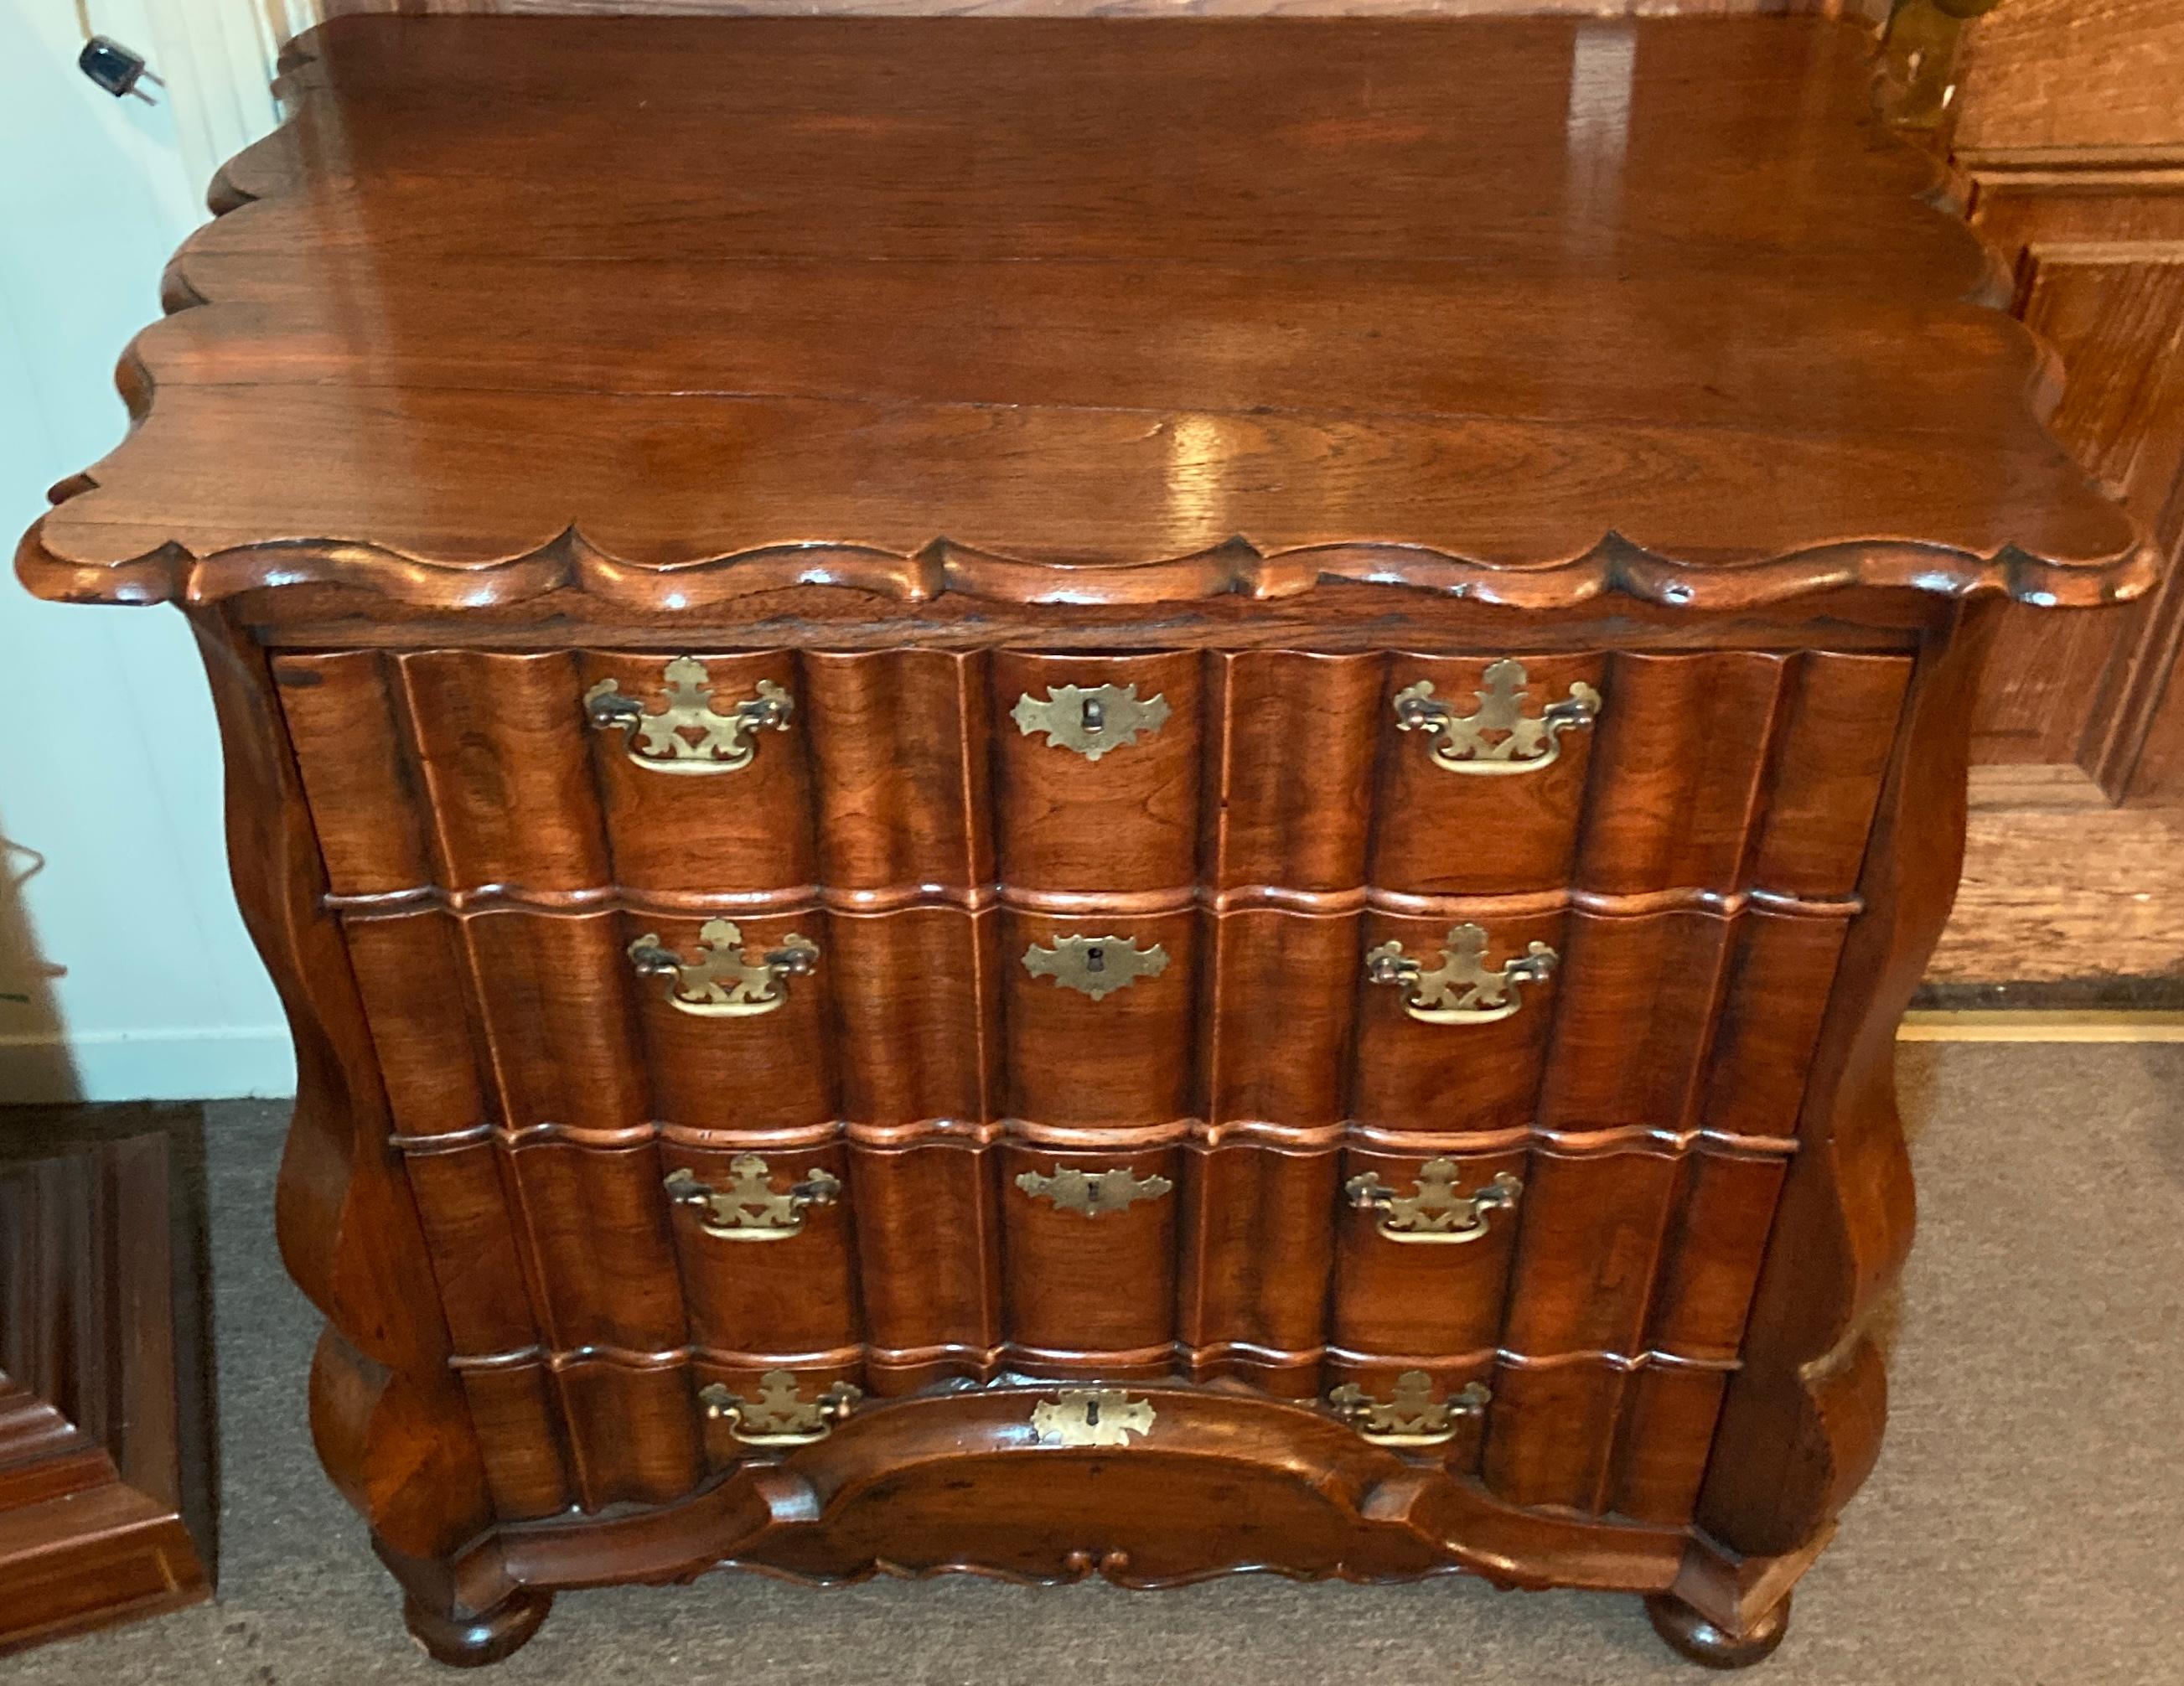 Antique 19th century Dutch oak chest with oak lining.